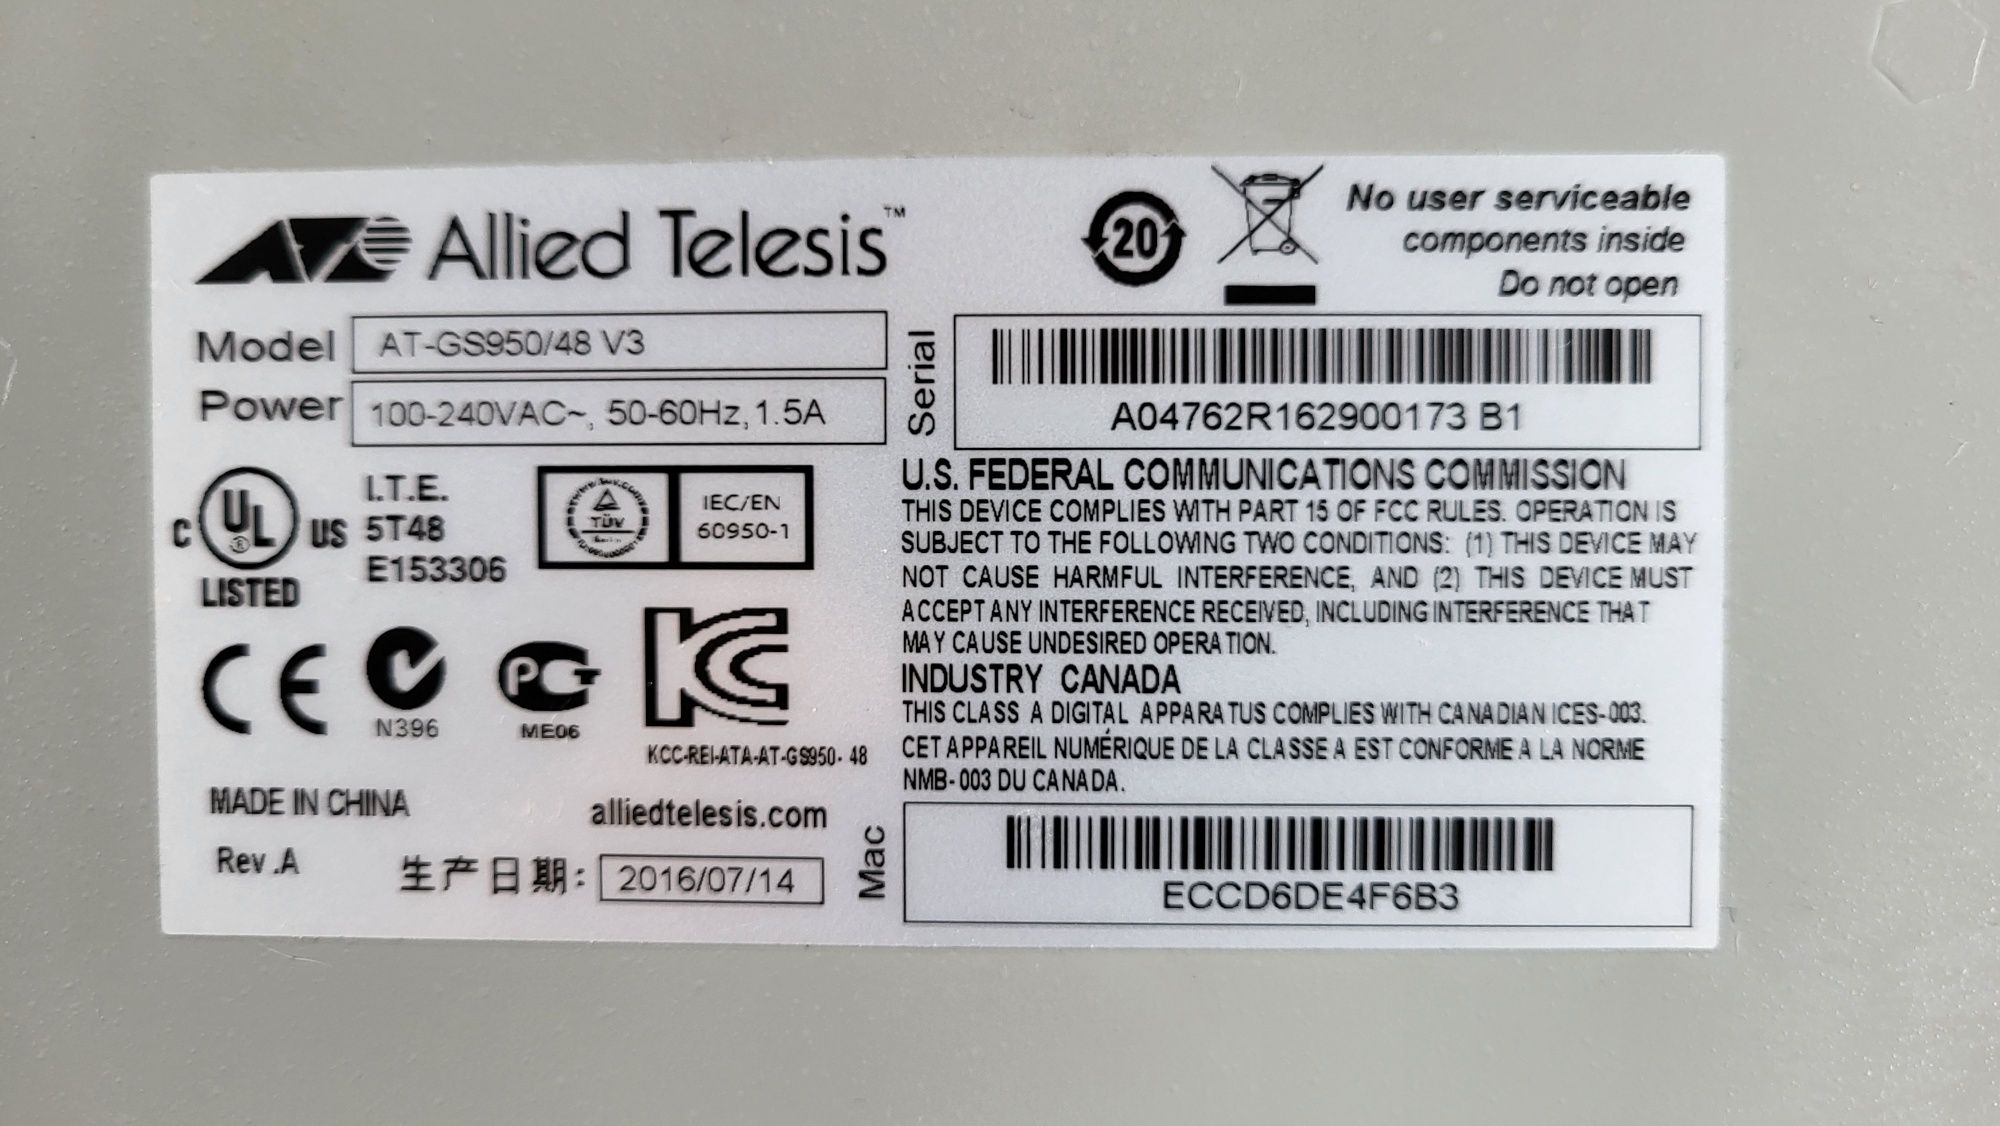 Switch Gigabit Allied Telesis Layer 2 cu 48 porturi